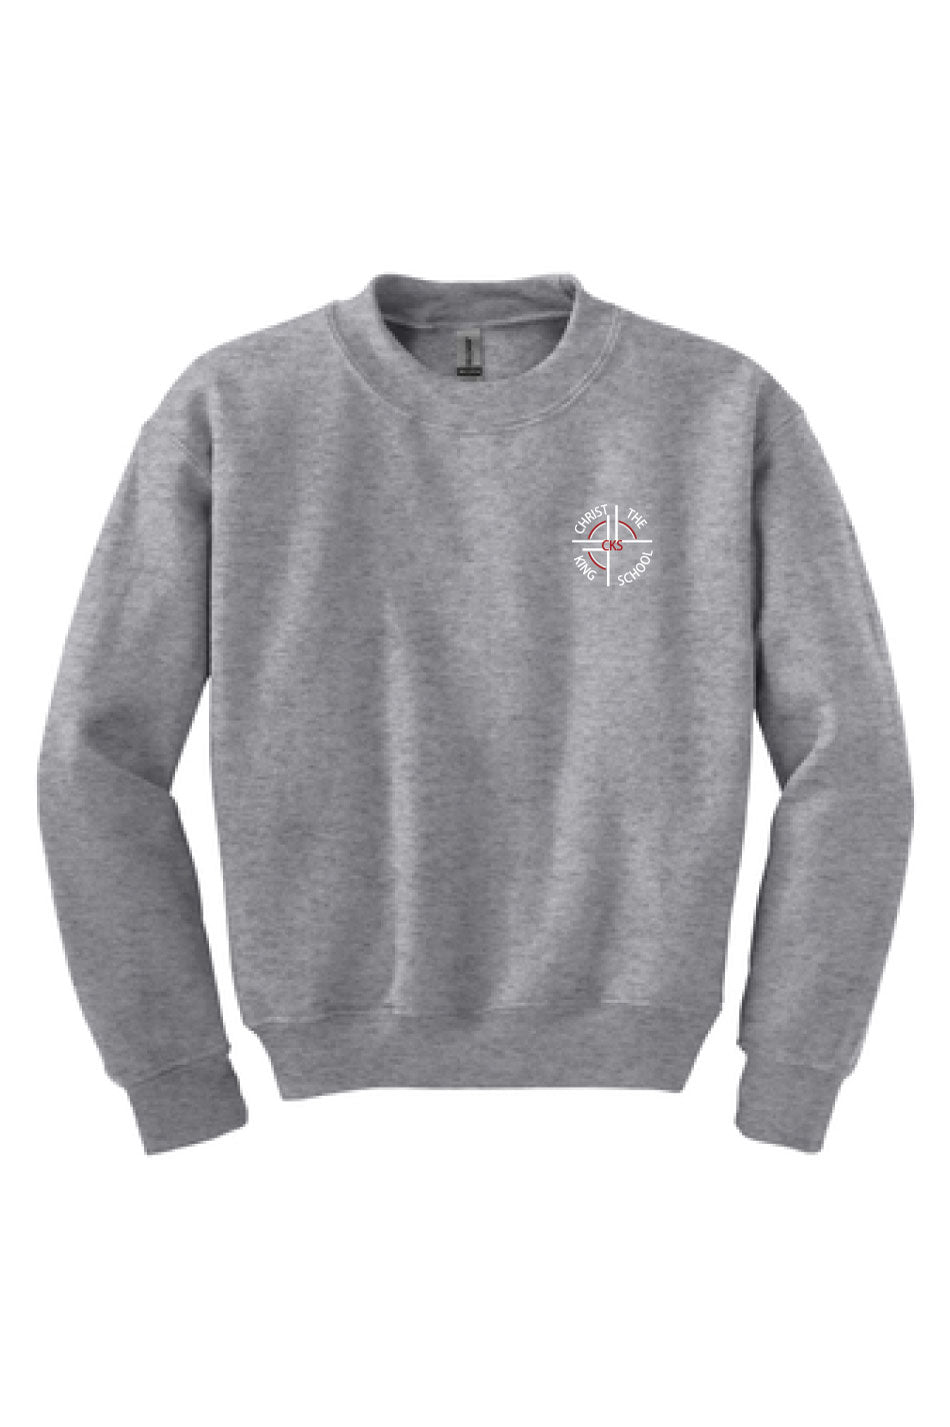 Pre-Order ADULT CKS Crewneck Sweatshirt - Grey